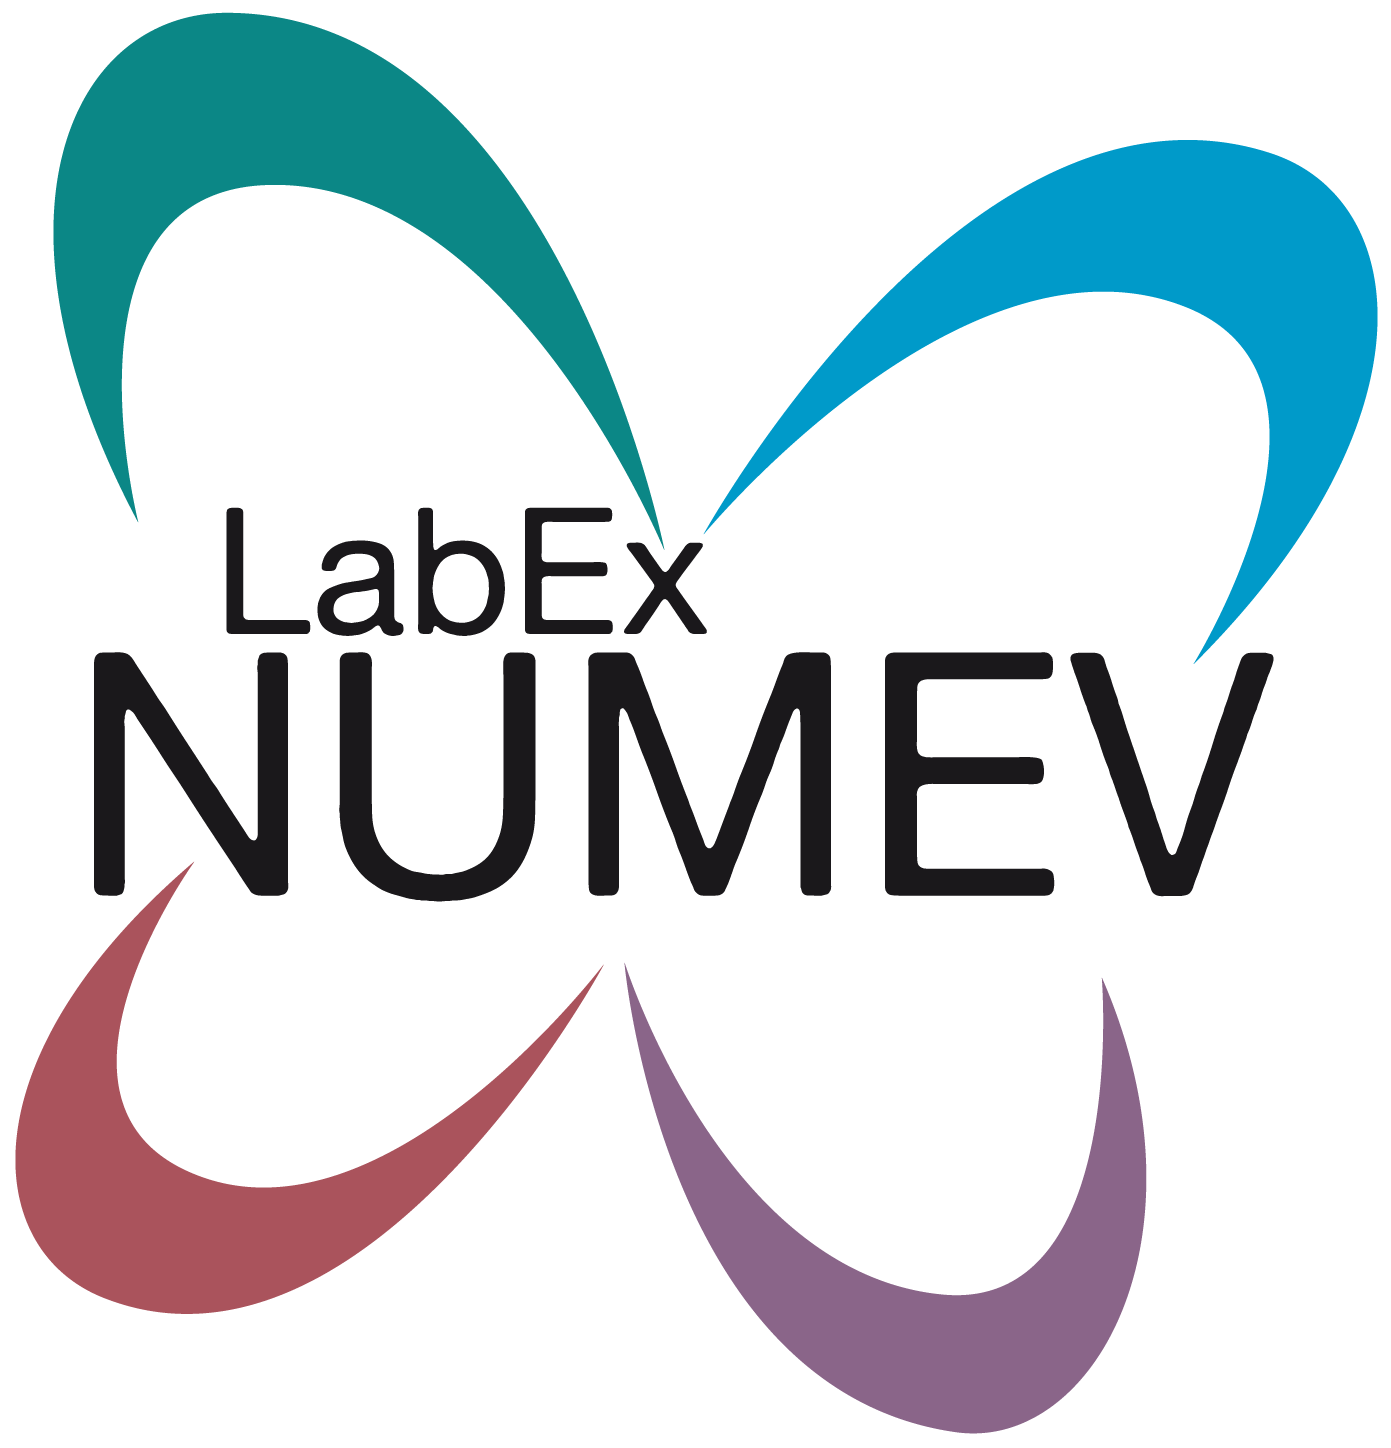 LabEx NUMEV proudly invites Marc Enrst to EuroMov seminar